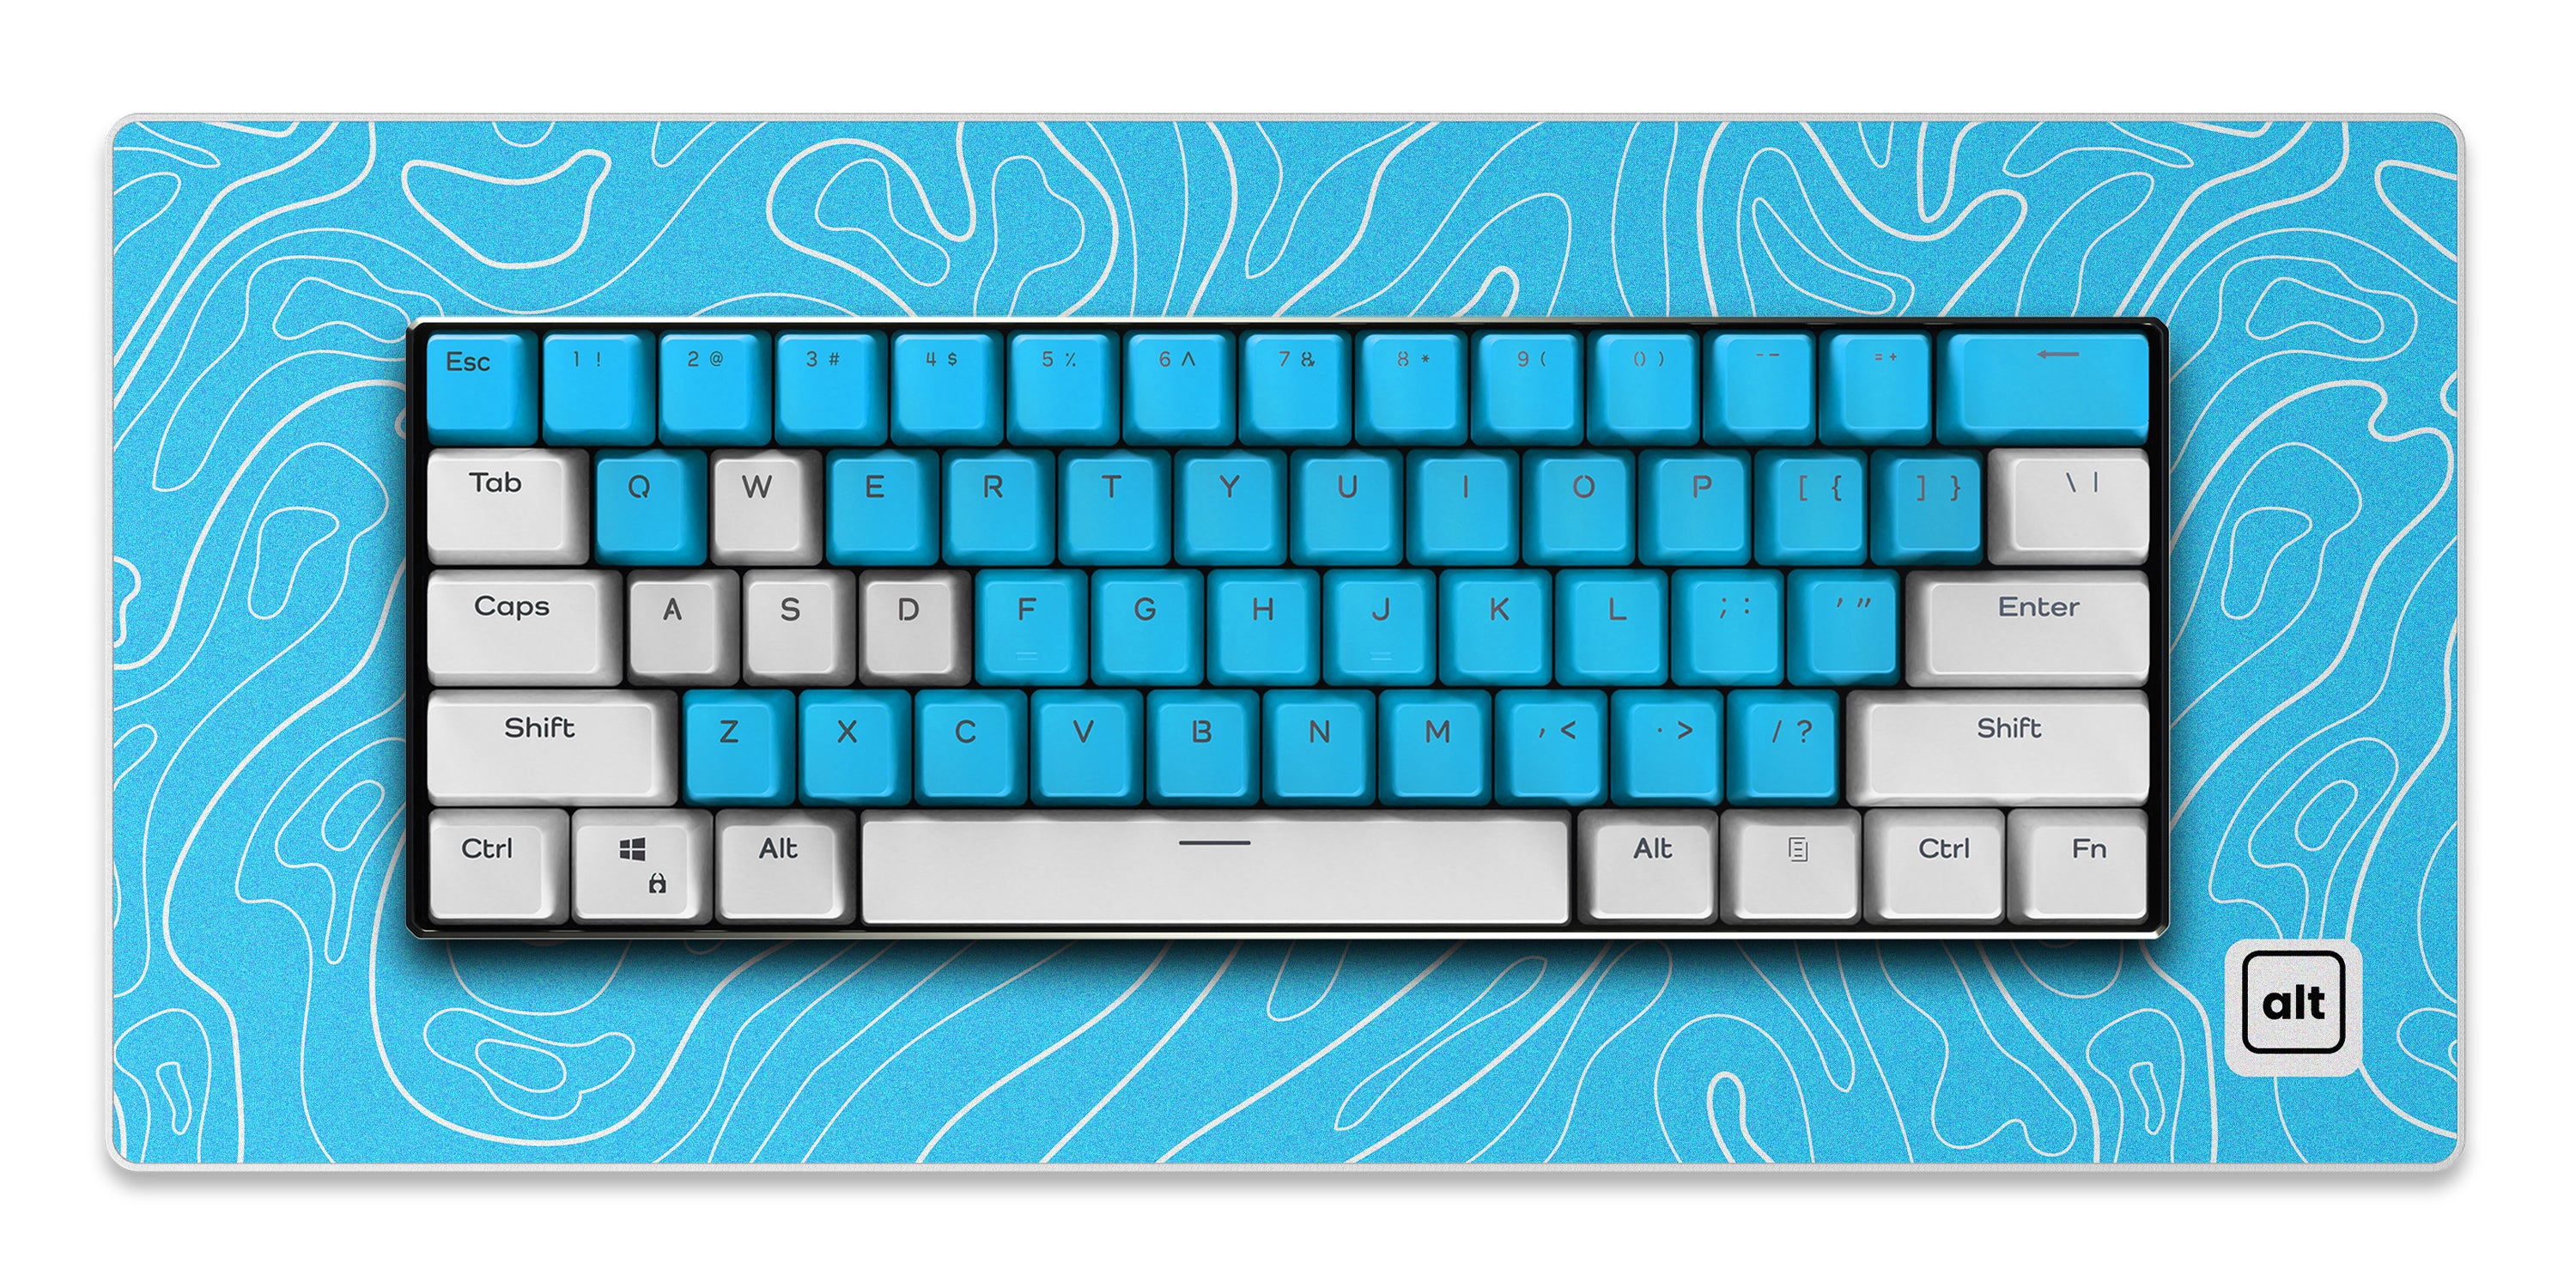 CANDY PAINT Edition, Kraken Pro 60% Mechanical Keyboard